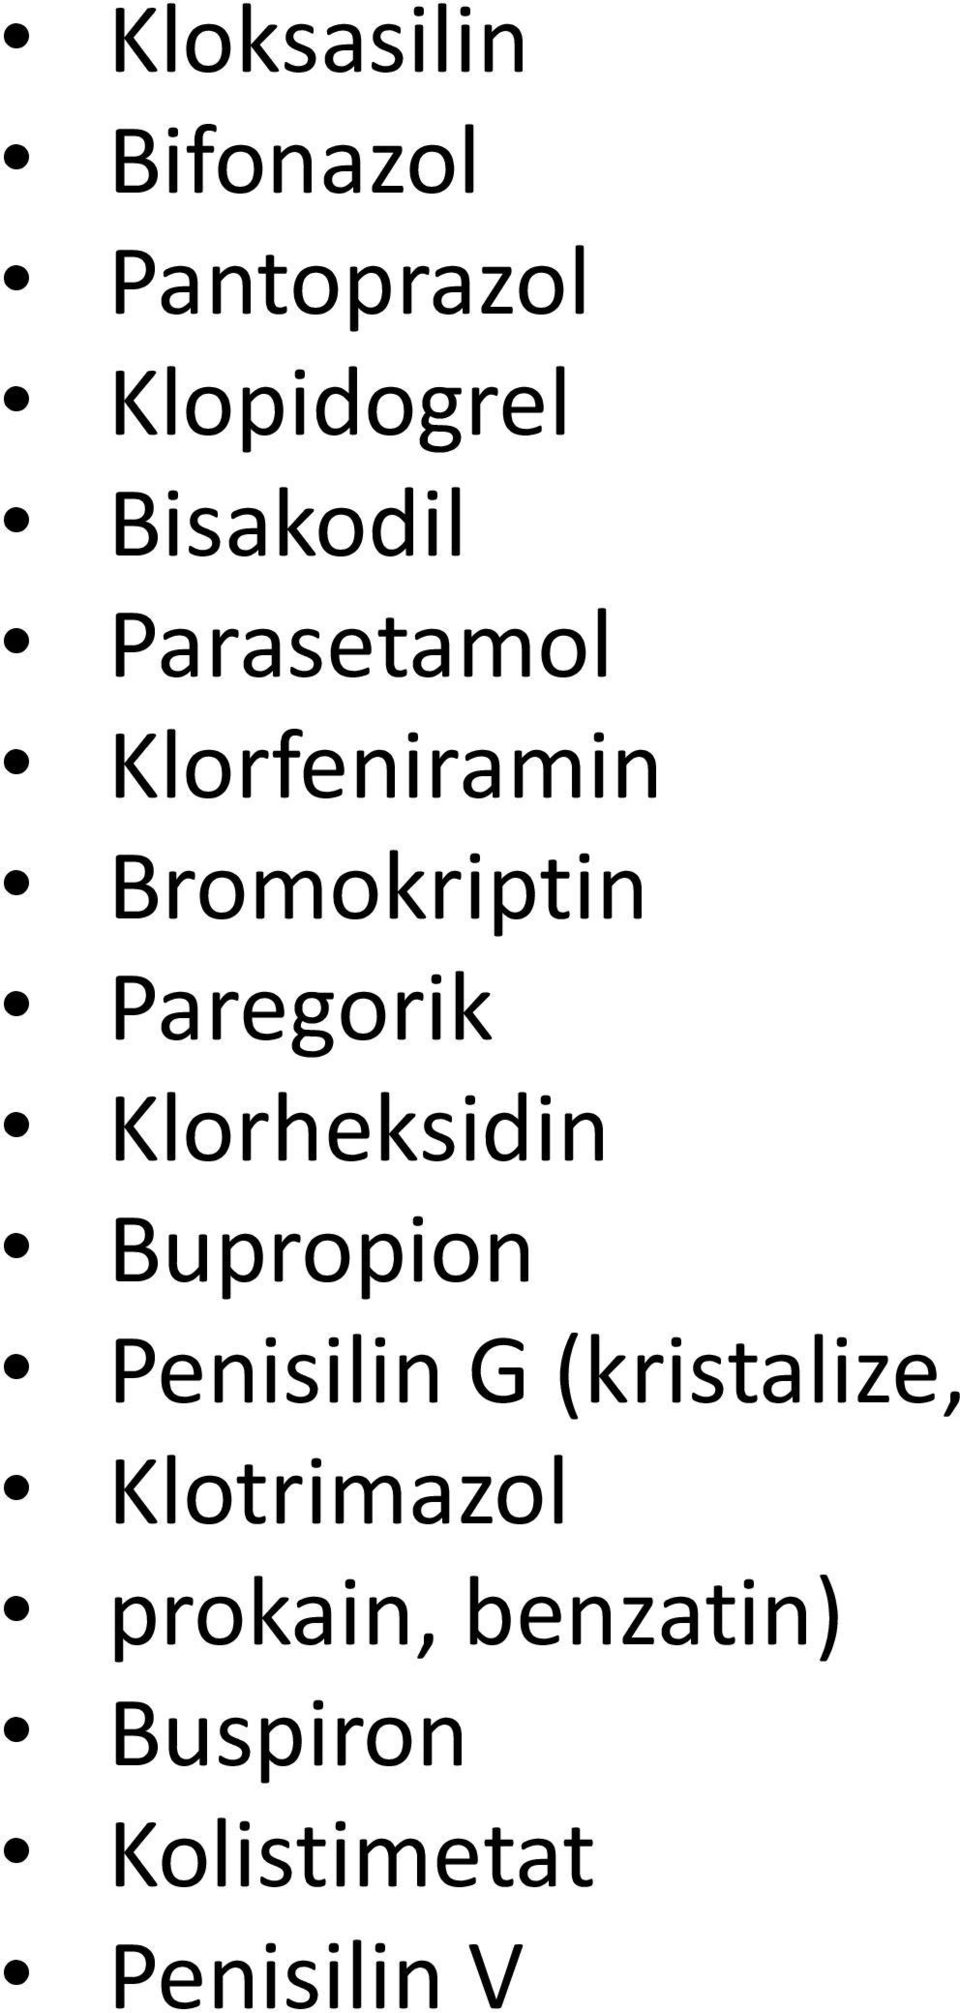 Paregorik Klorheksidin Bupropion Penisilin G